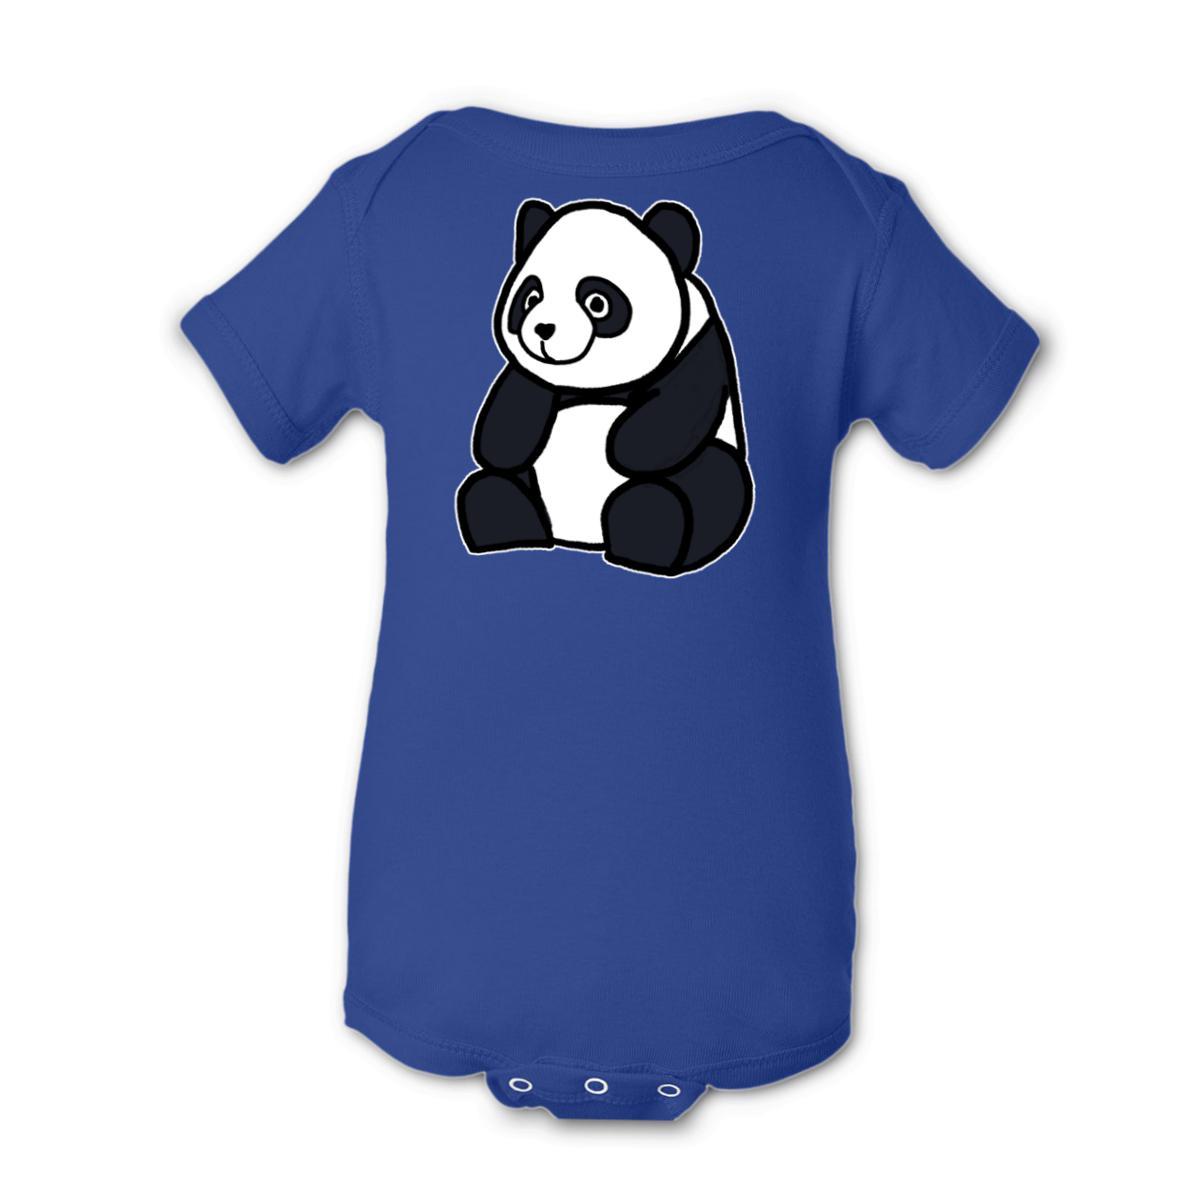 Panda Onesie 18M royal-blue